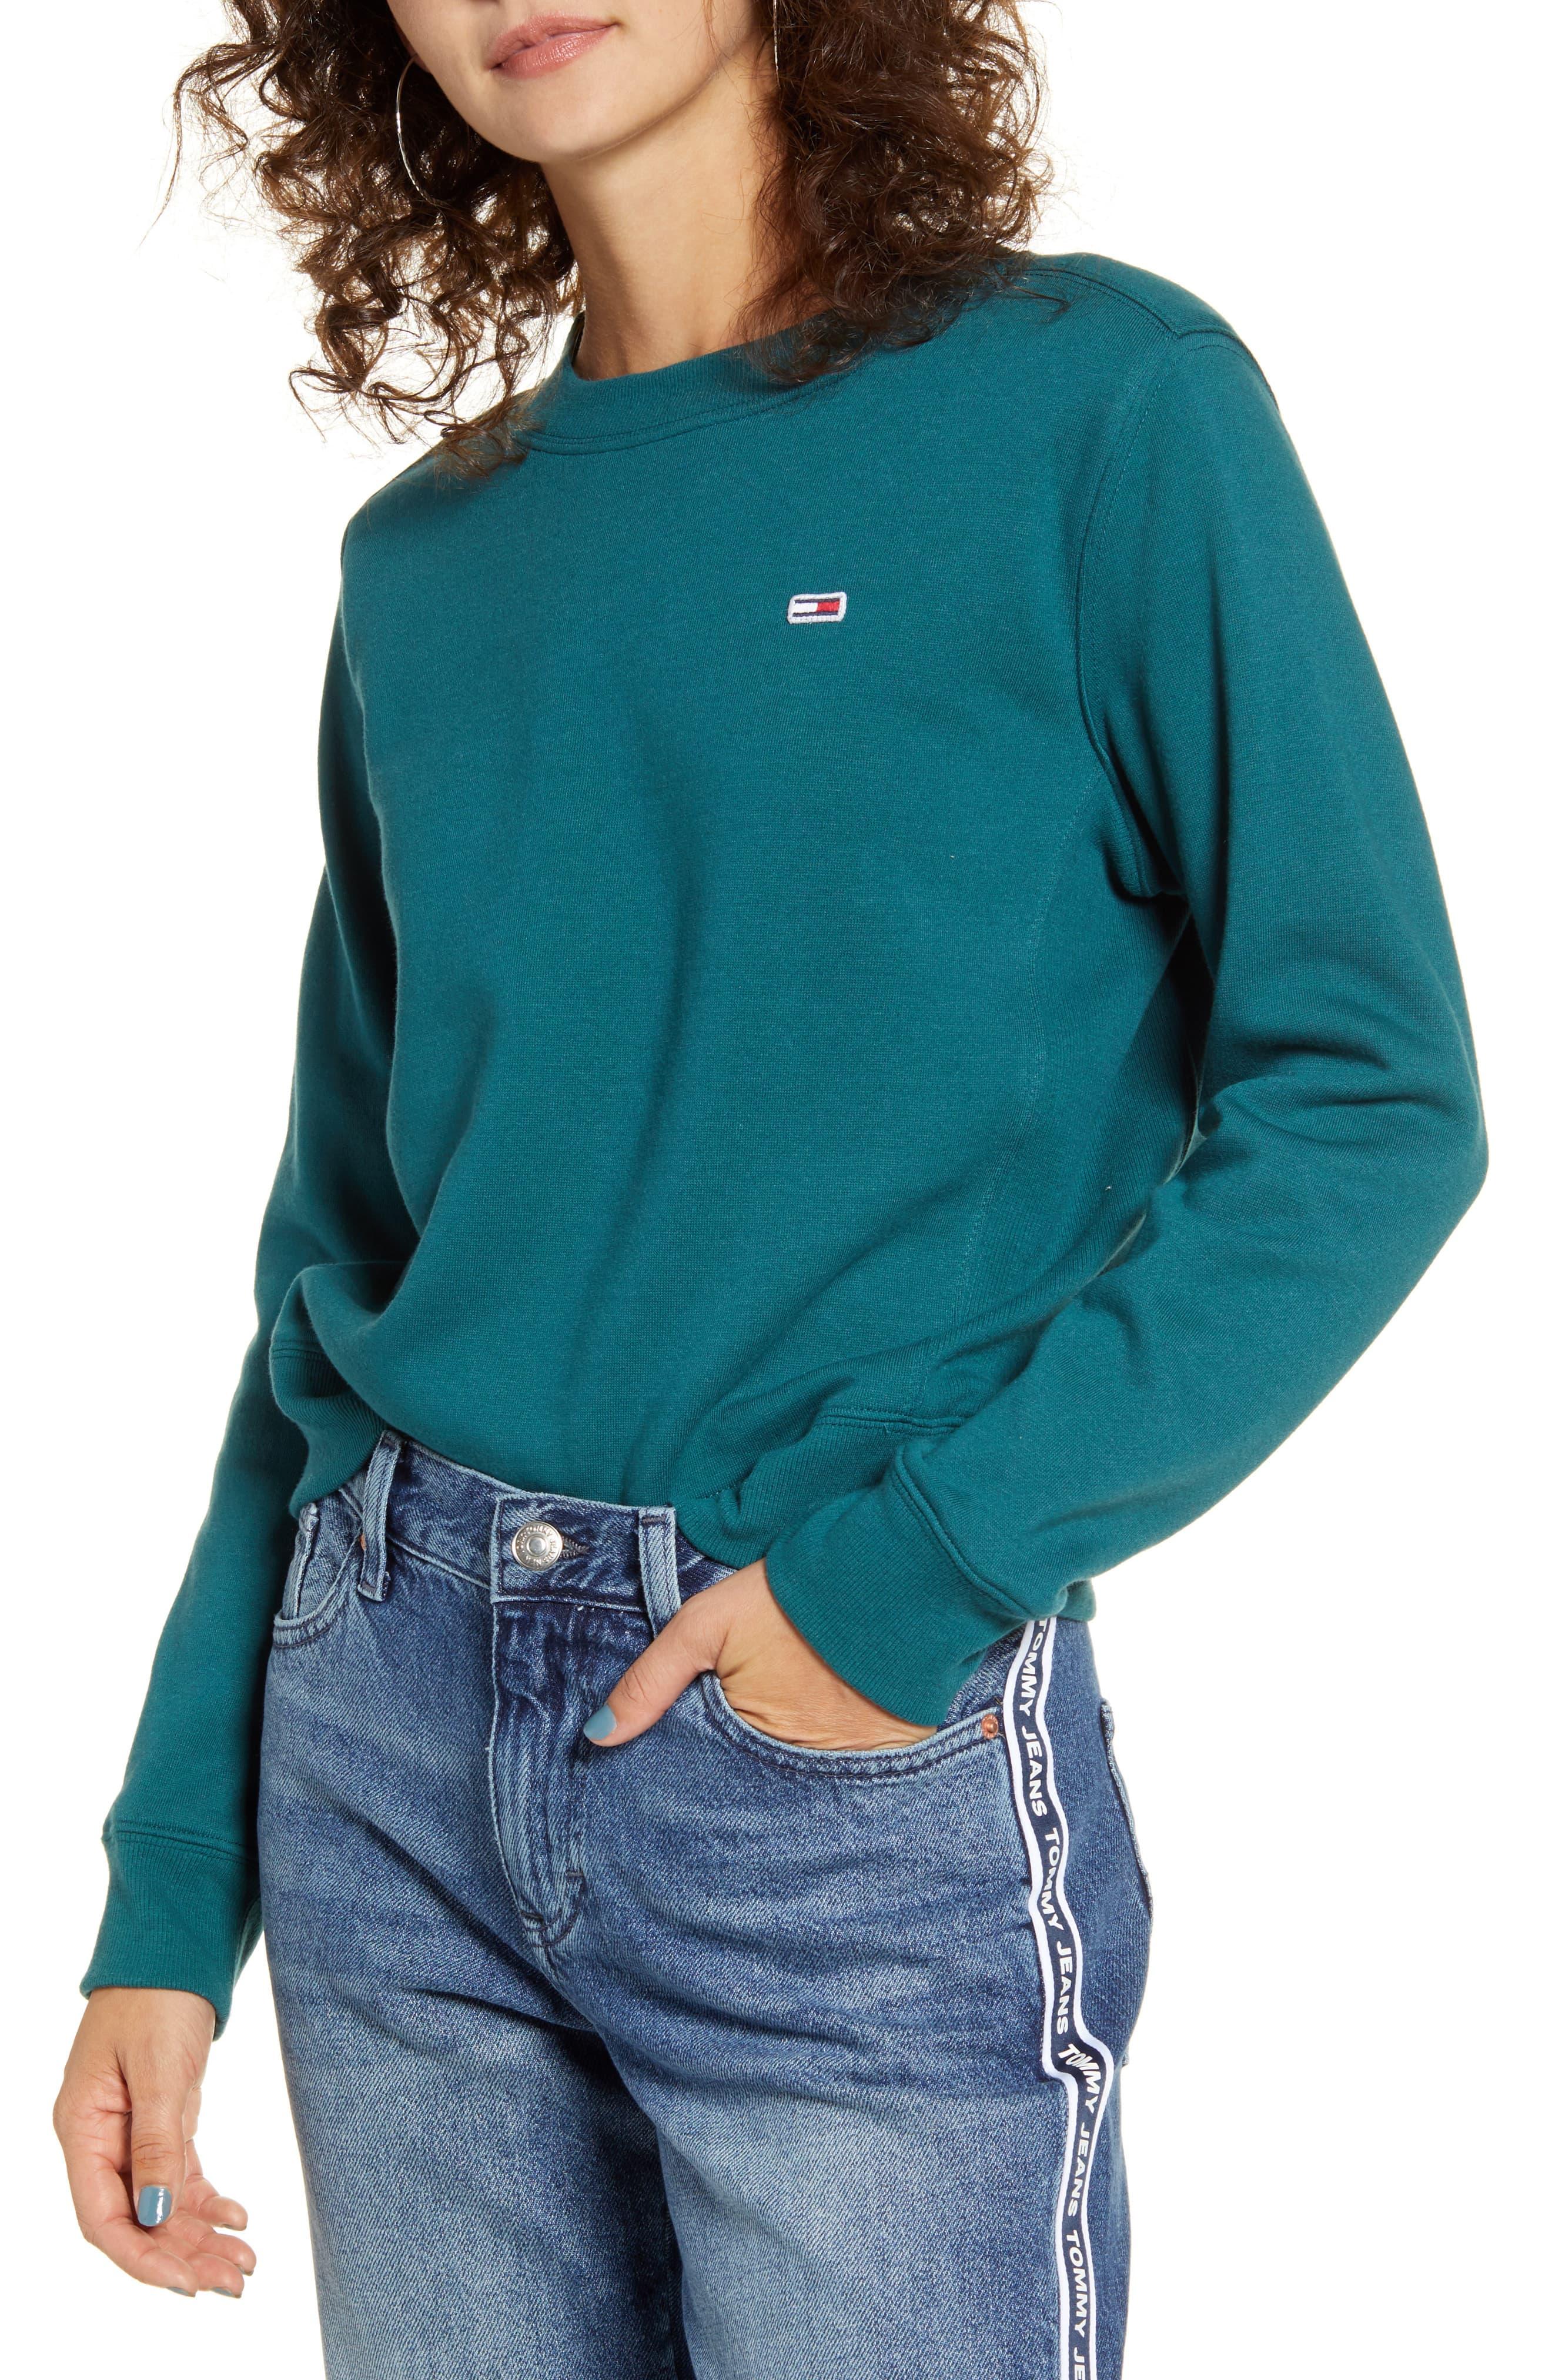 tommy hilfiger classic sweatshirt